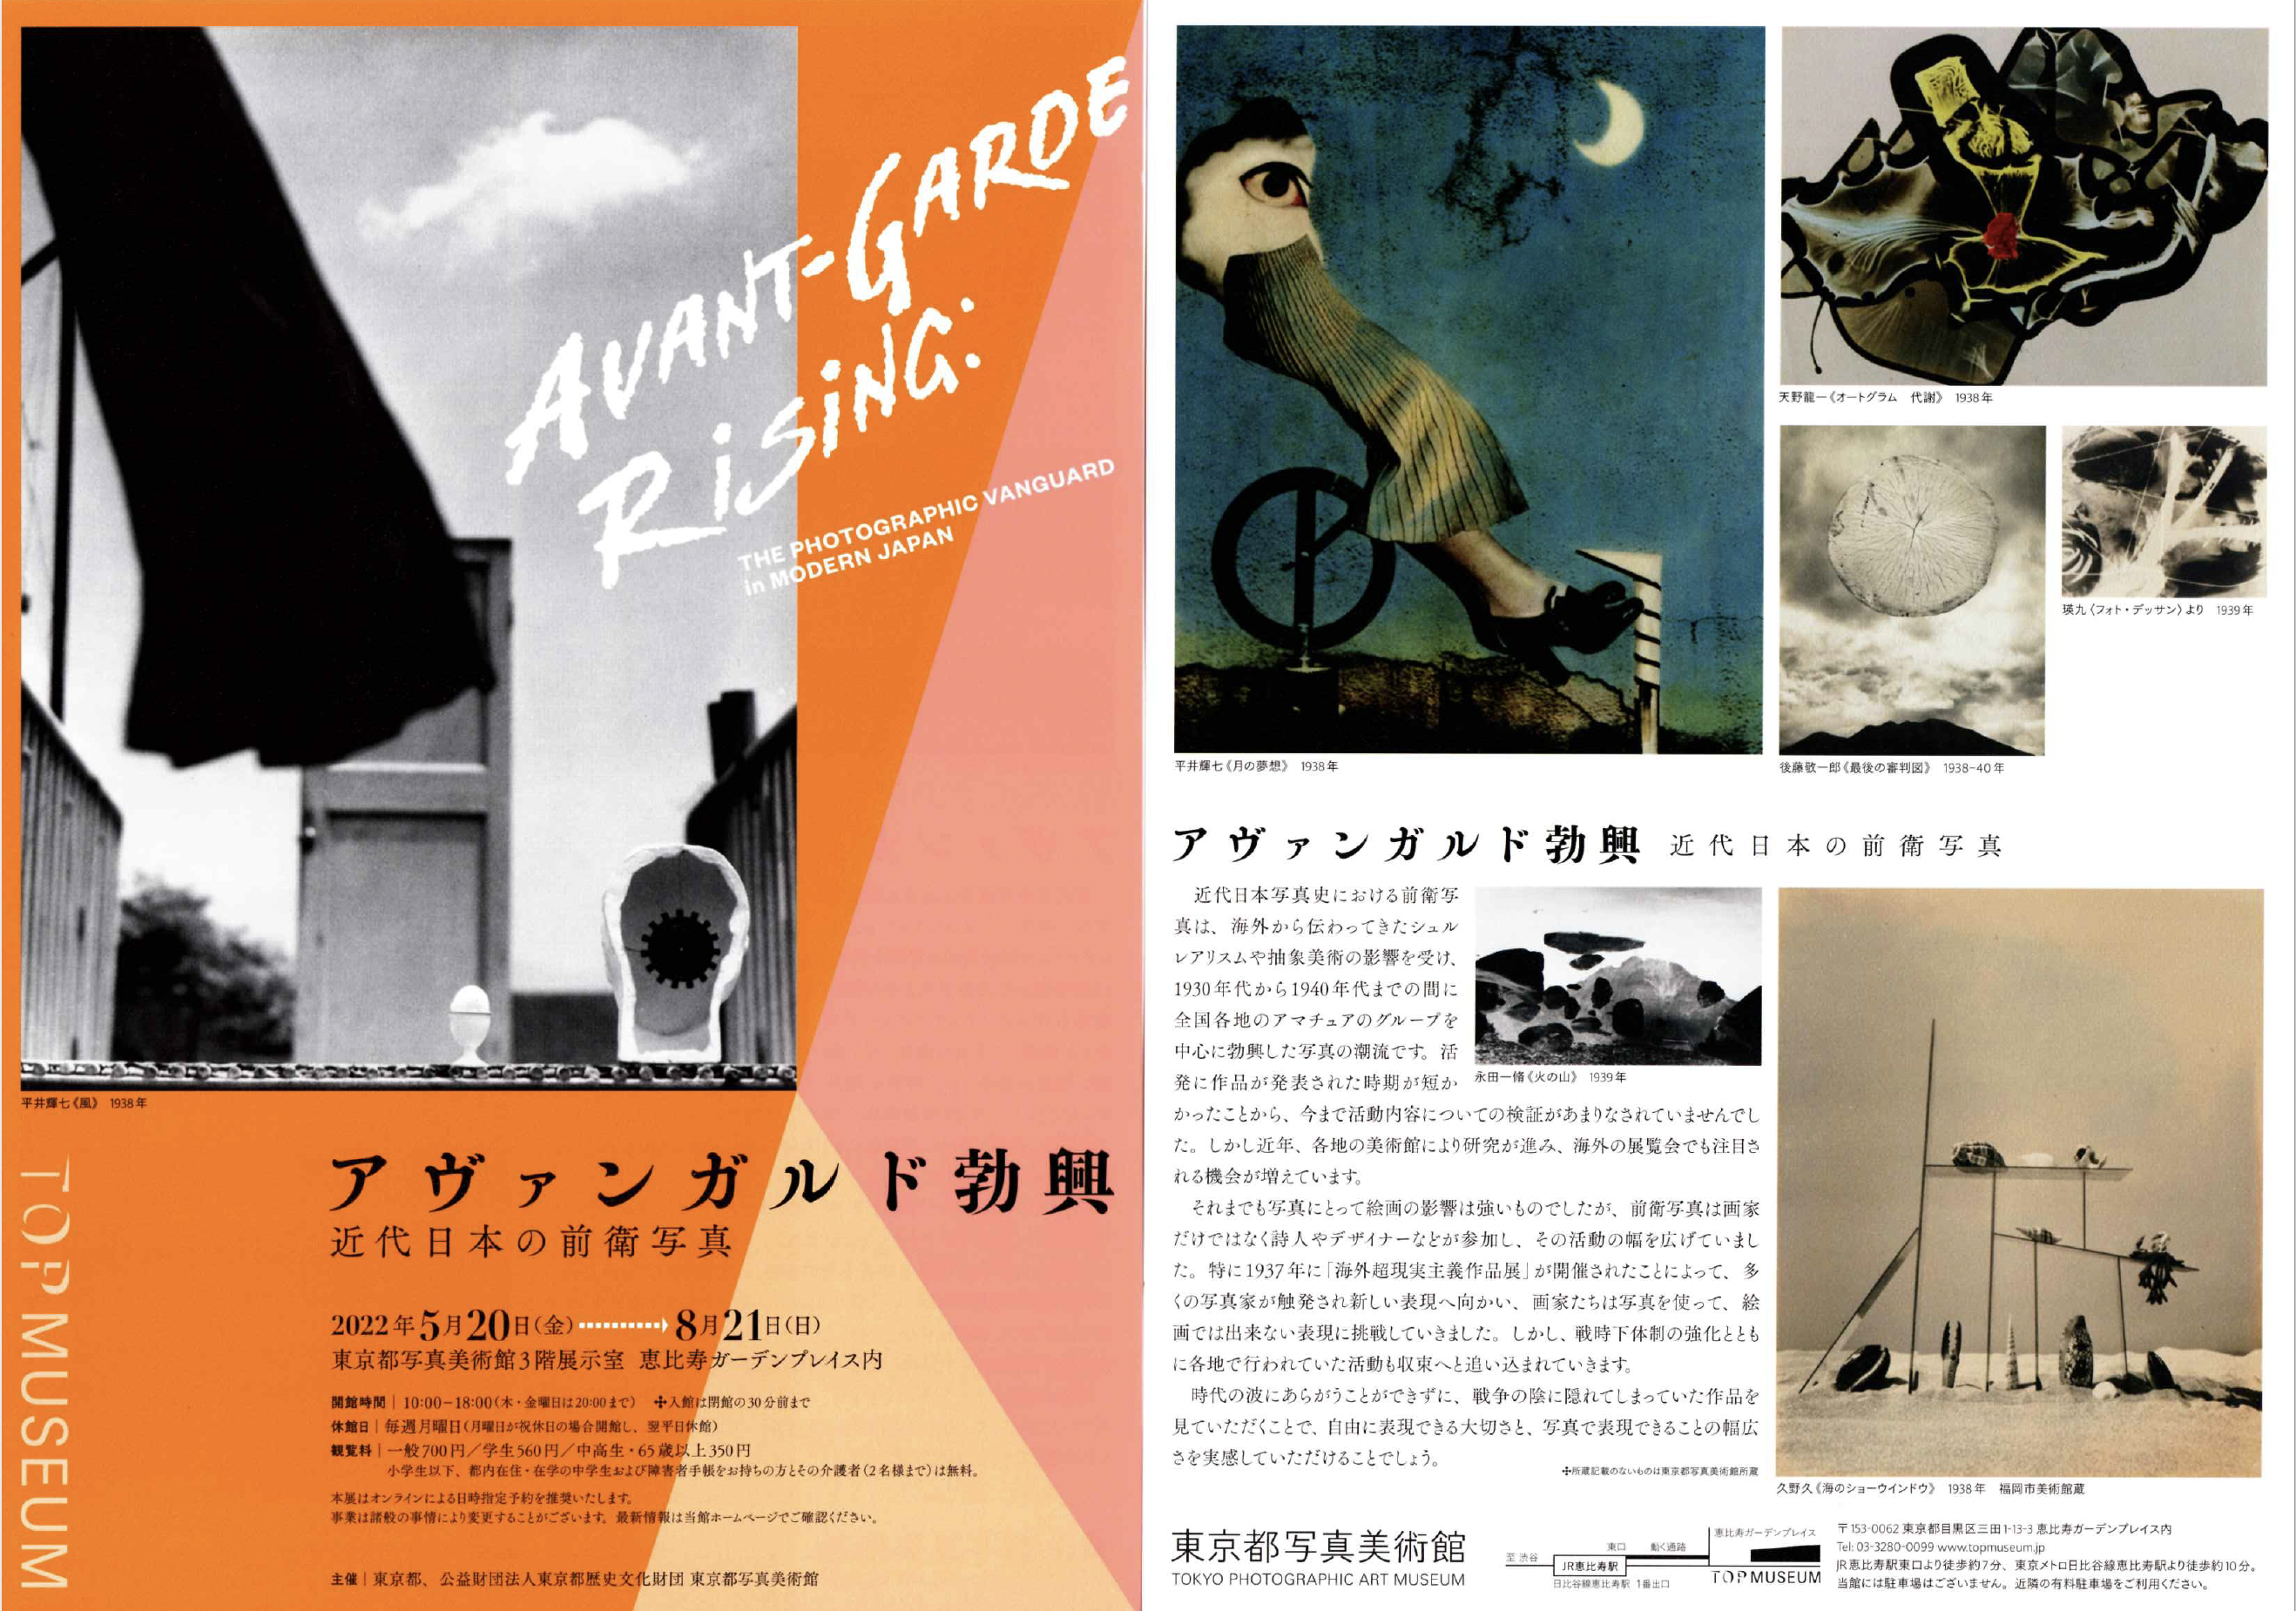 Exhibited Artist: Iwata Nakayama, Toru Kono, Osamu Shiihara